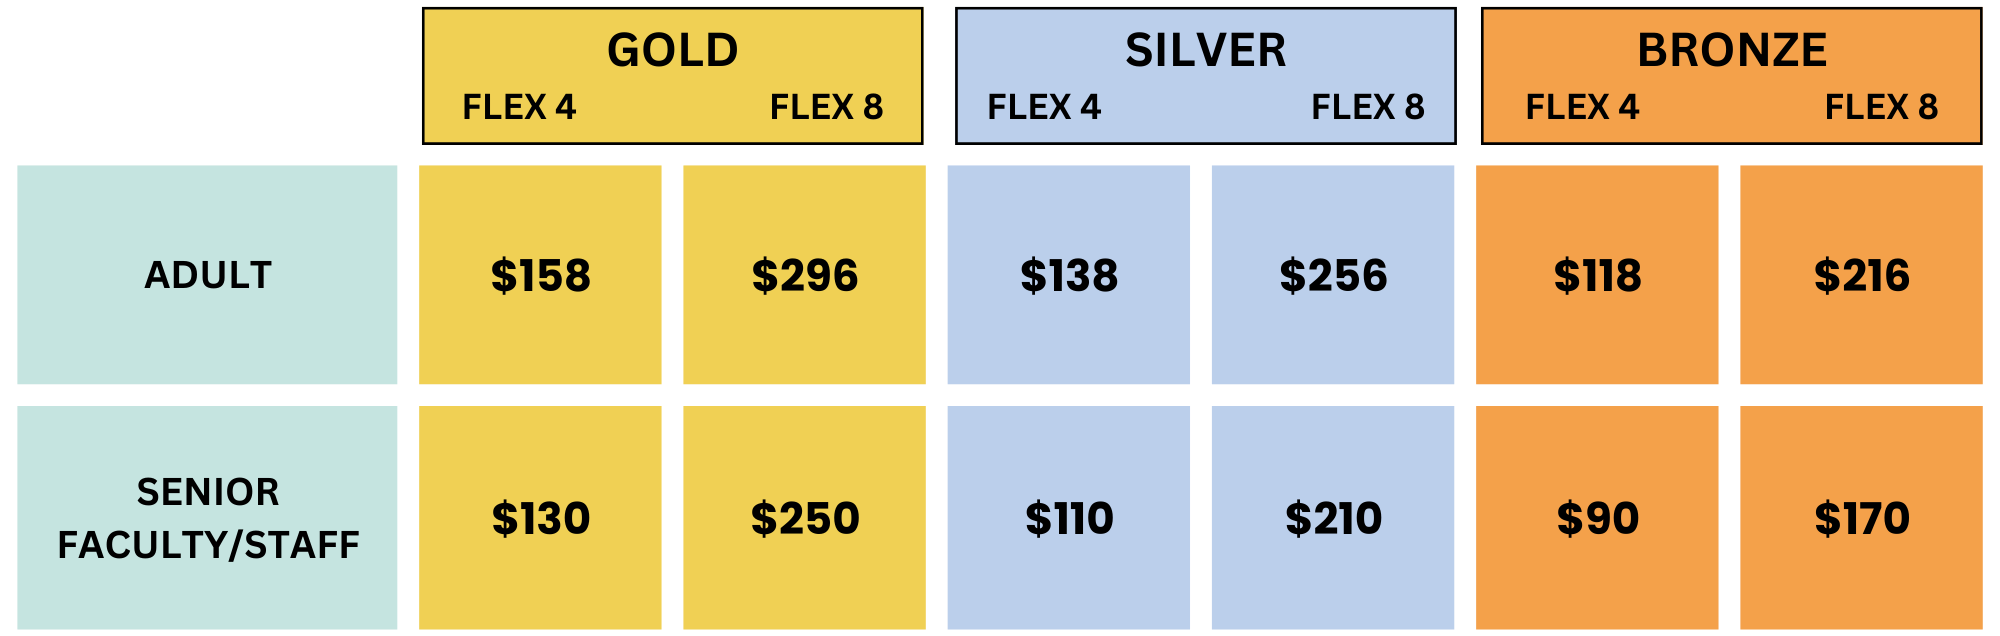 flex pass pricing